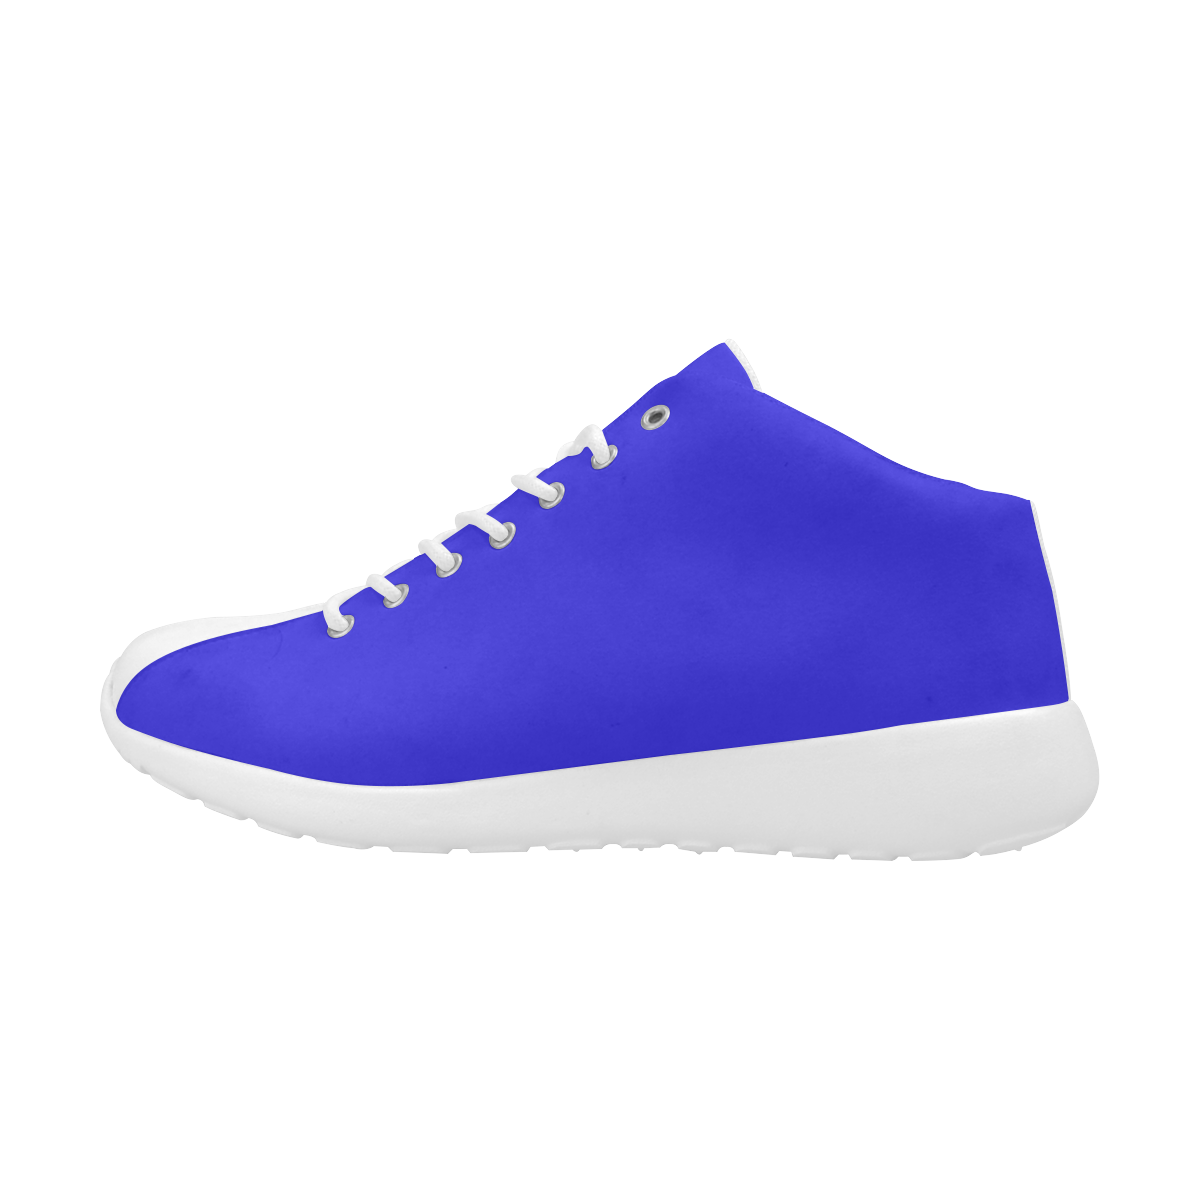 Blessed Mother Blue Men's Basketball Training Shoes (Model 47502)